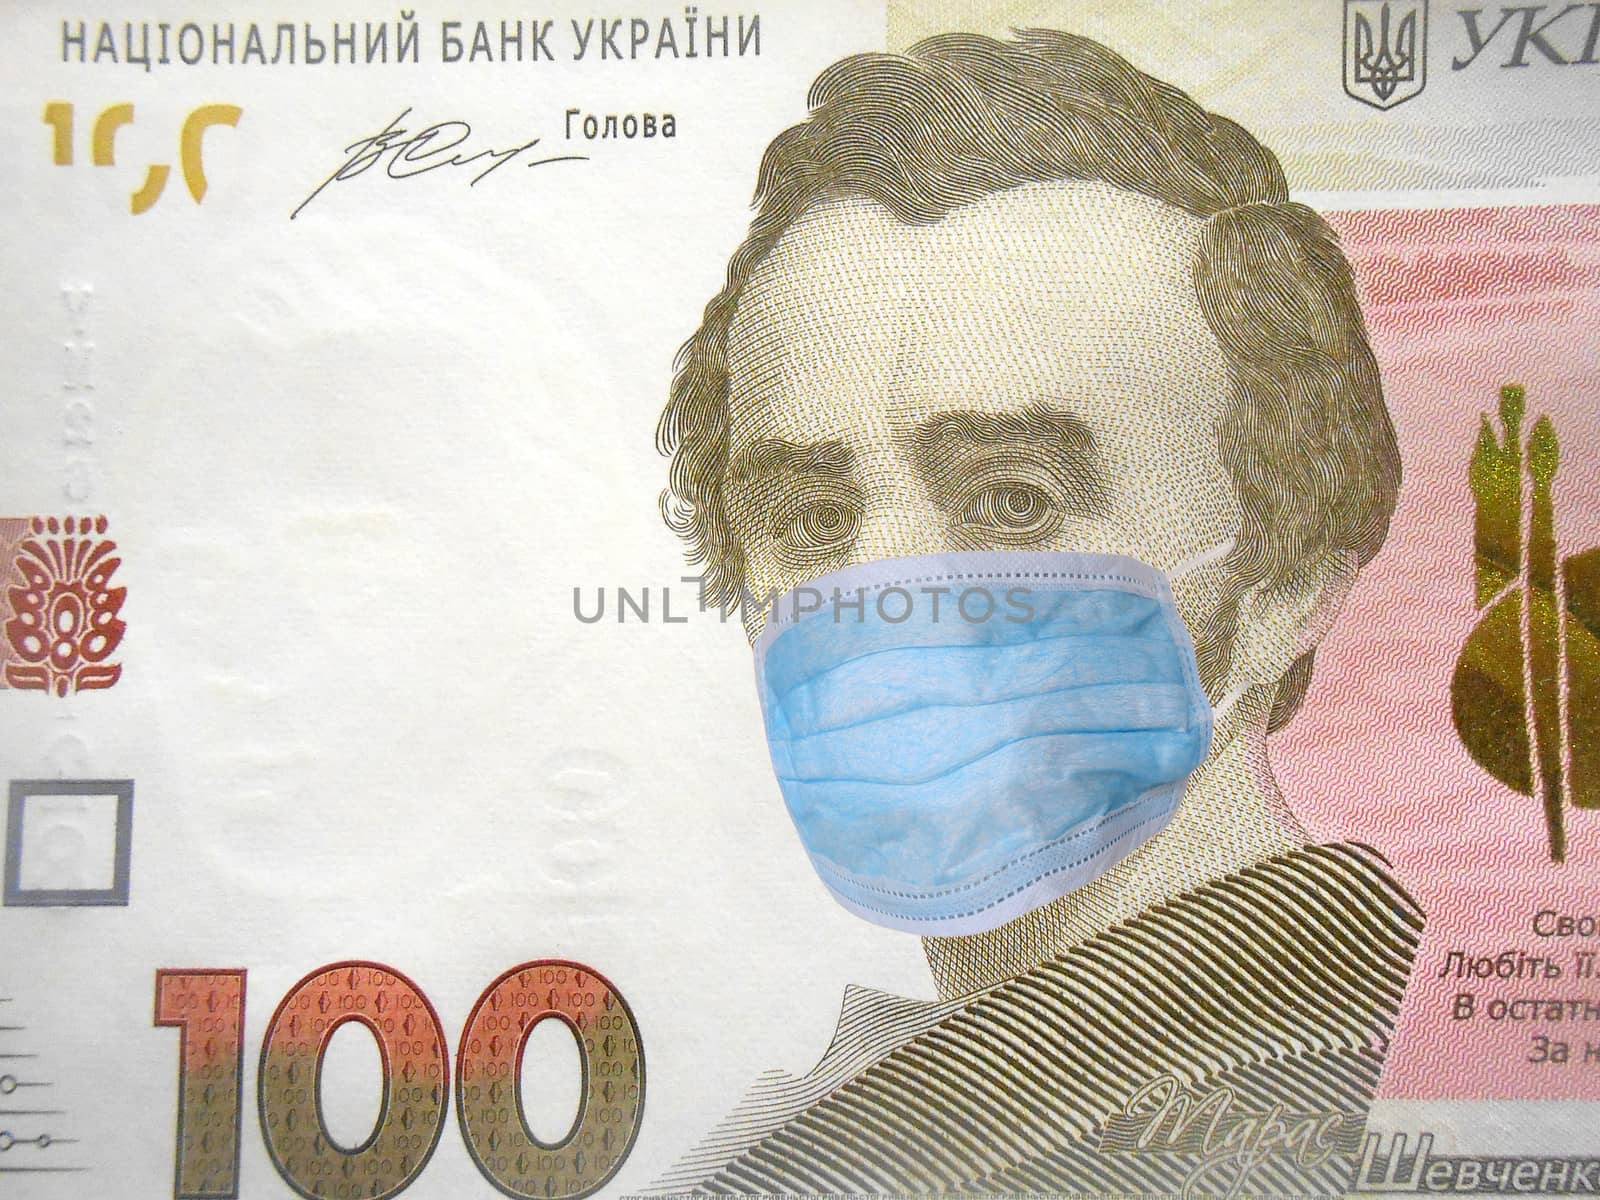 Coronavirus COVID-19 in Ukraine. 100 ukrainian money hryvnia money bill with face mask. World economy hit by corona virus outbreak and pandemic fears. Coronavirus affects global stock market. Finance and crisis concept.